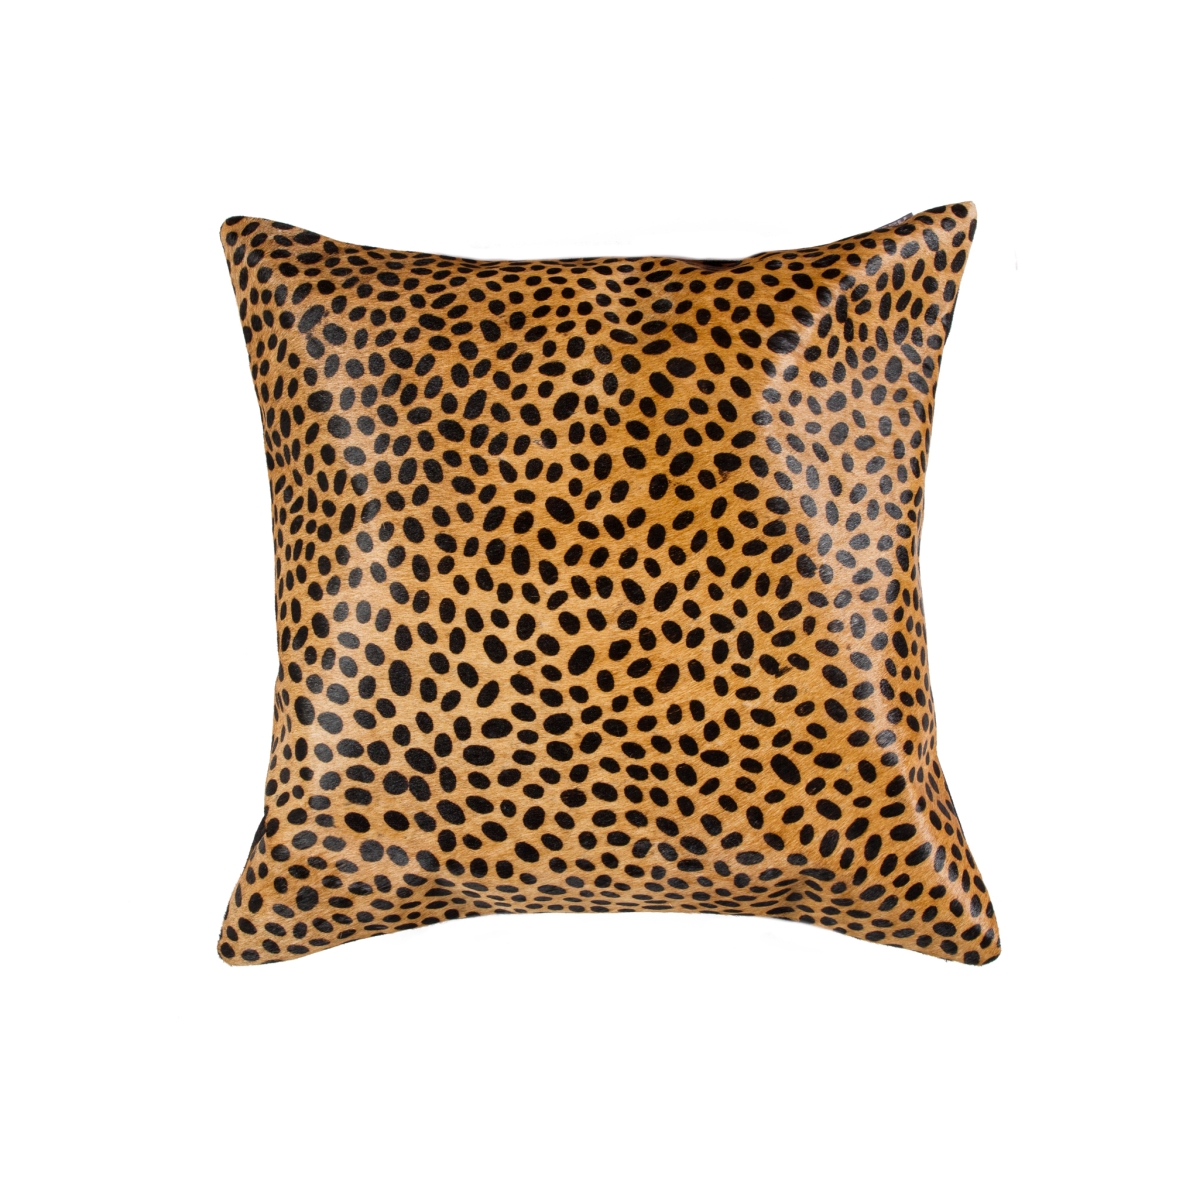 676685000248 18 X 18 In. Torino Togo Cowhide Pillow - Cheetah